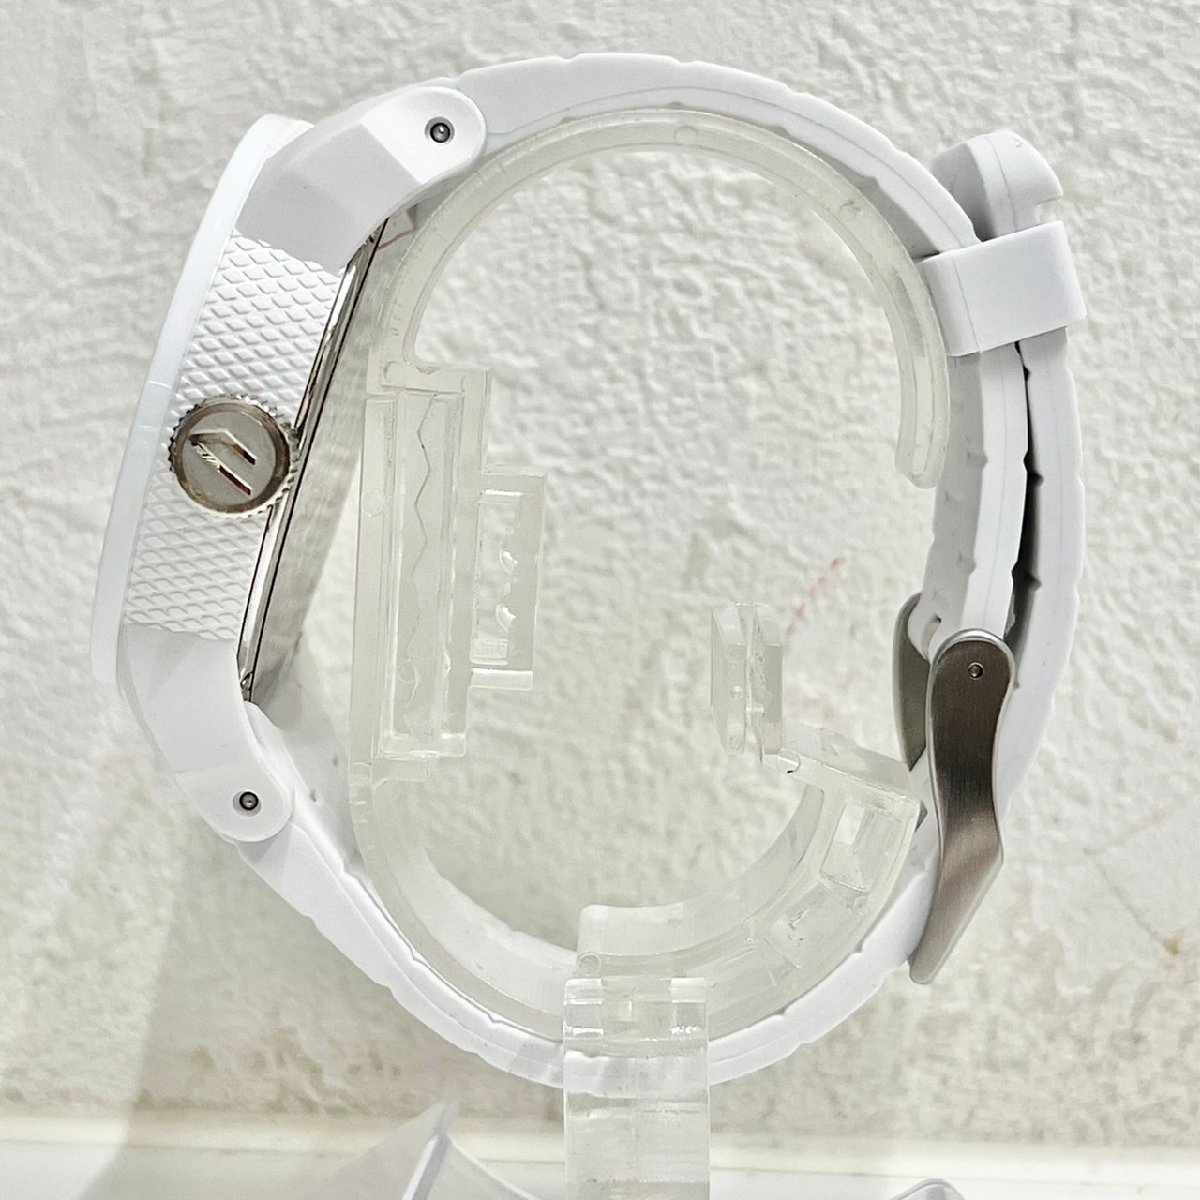 DIESEL ディーゼル 腕時計 DZ-1436 未使用 ホワイト 白 動作確認済み アナログ クォーツ 3針 電池式 白文字盤 メンズ 男性用 箱付き (I)_画像3